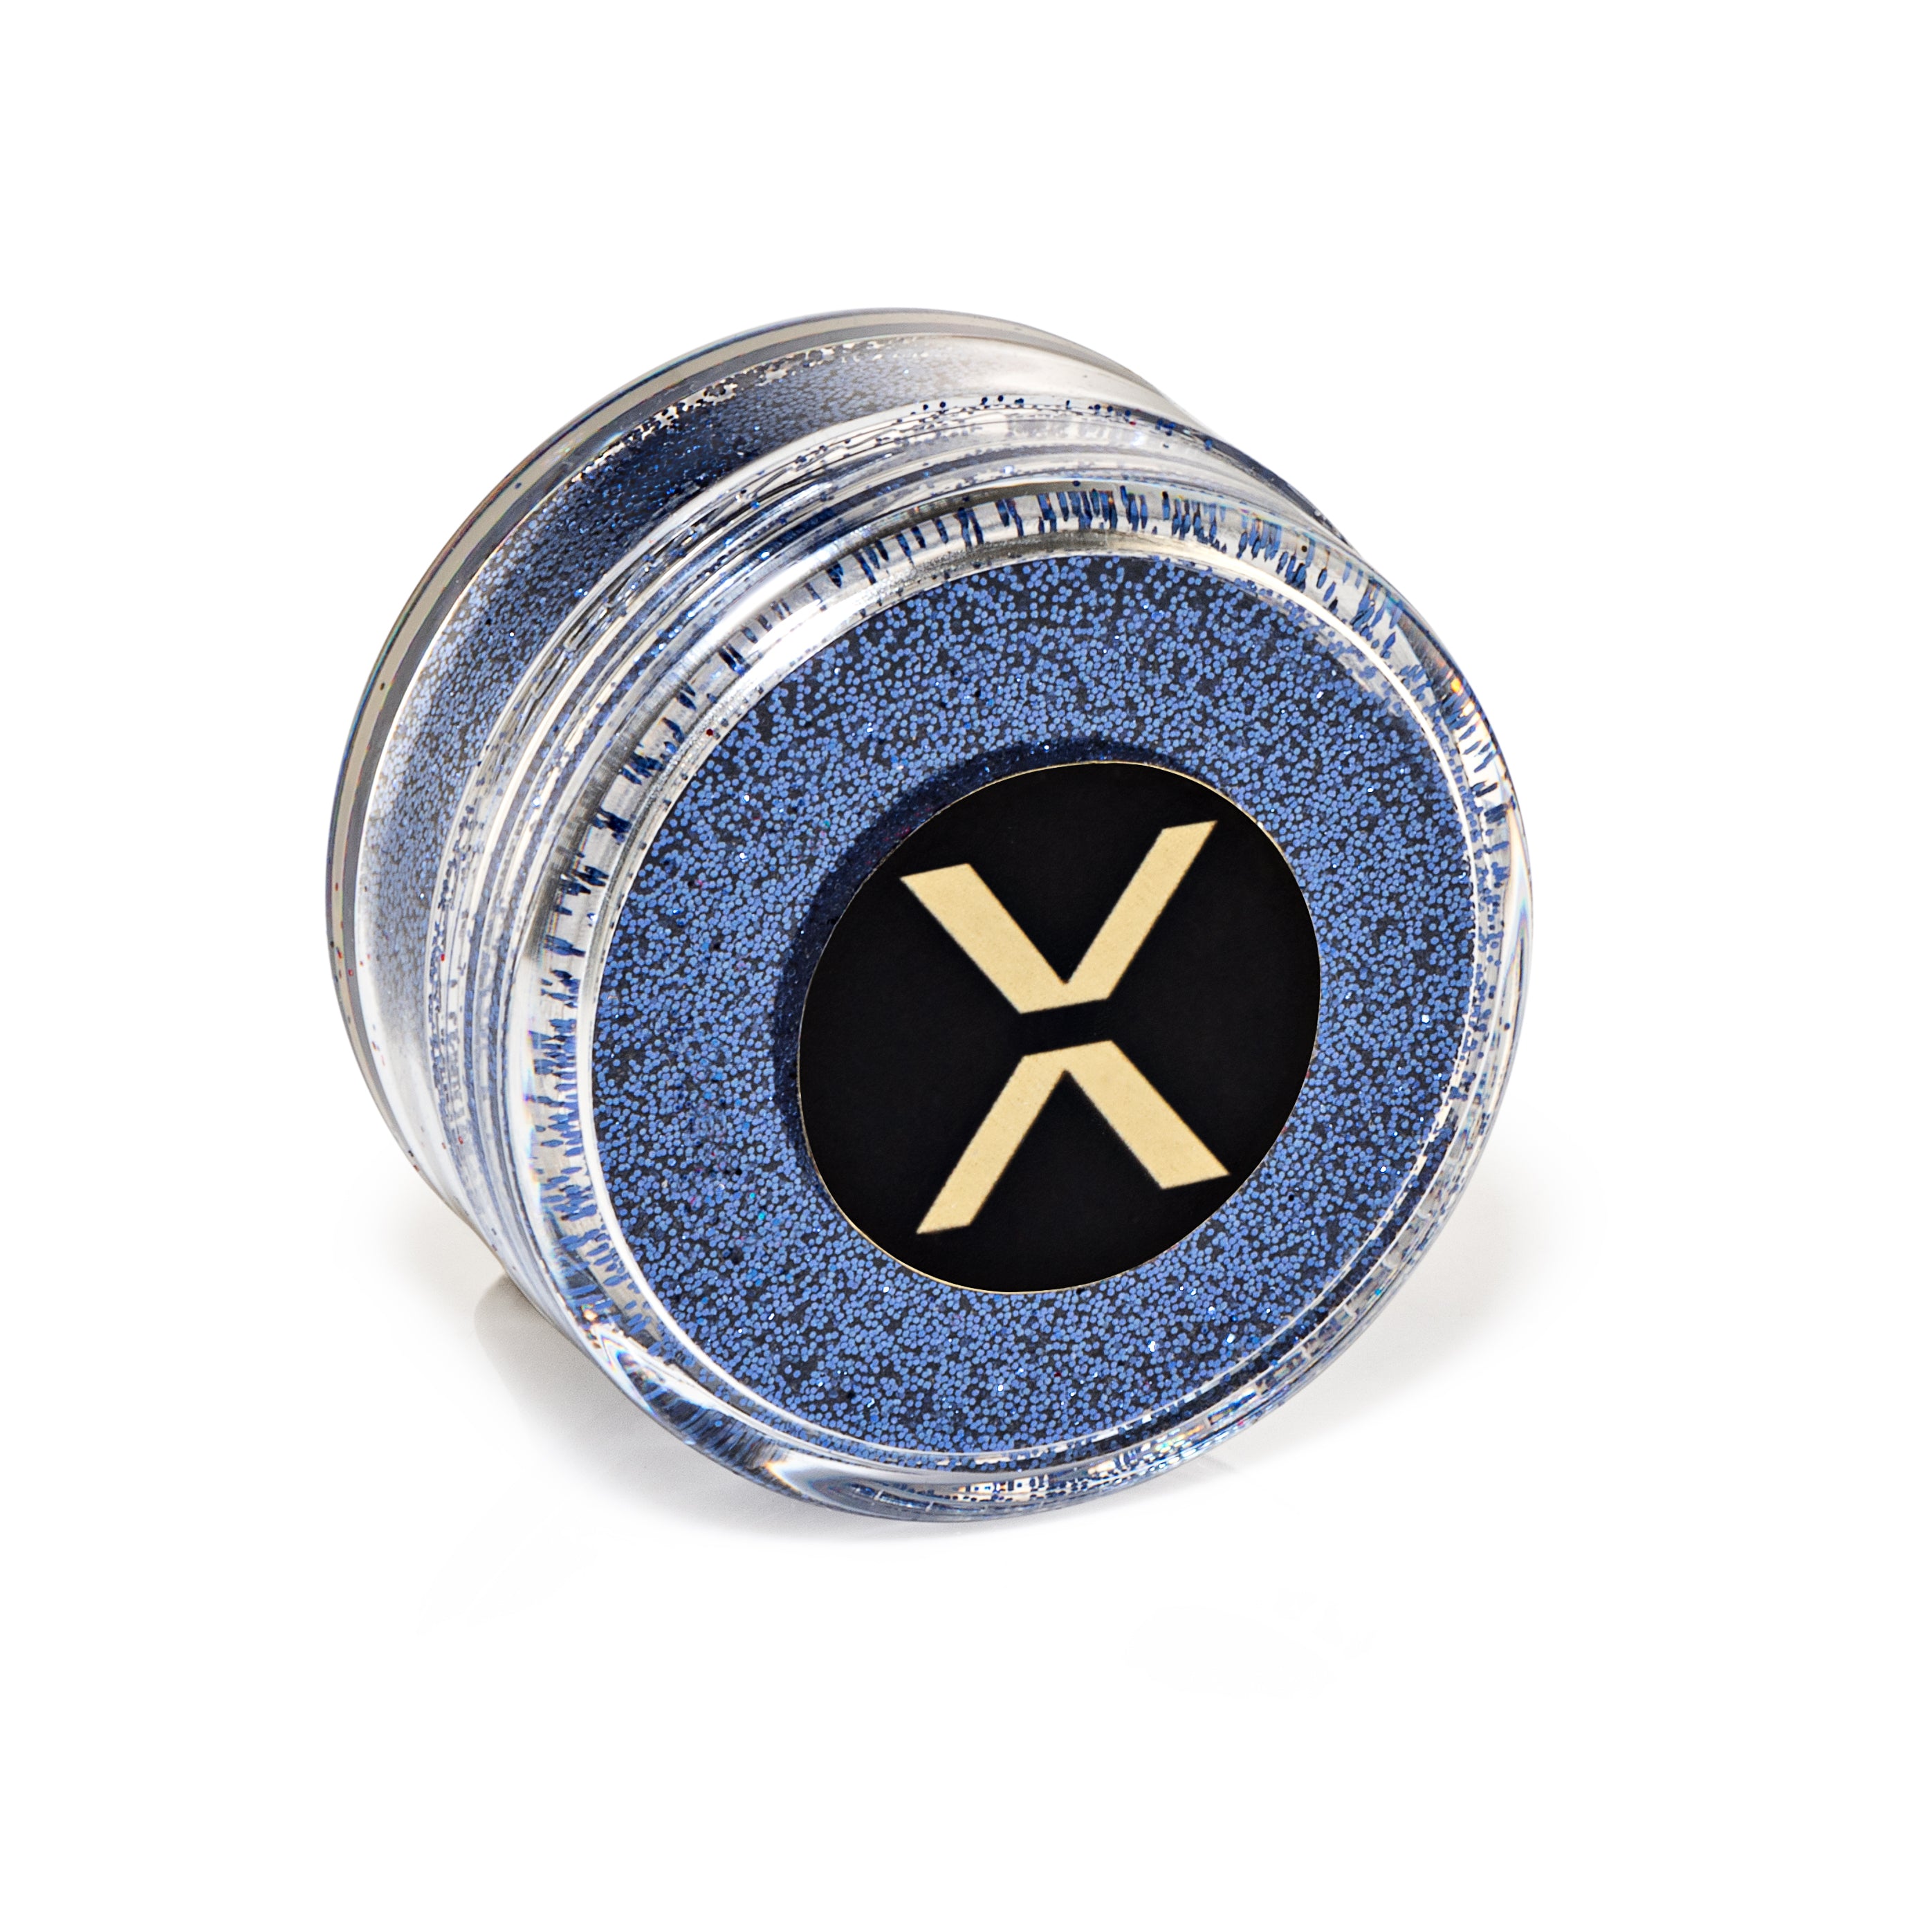 FIXY Biodegradable Cosmetic Glitter (Beta Blue)